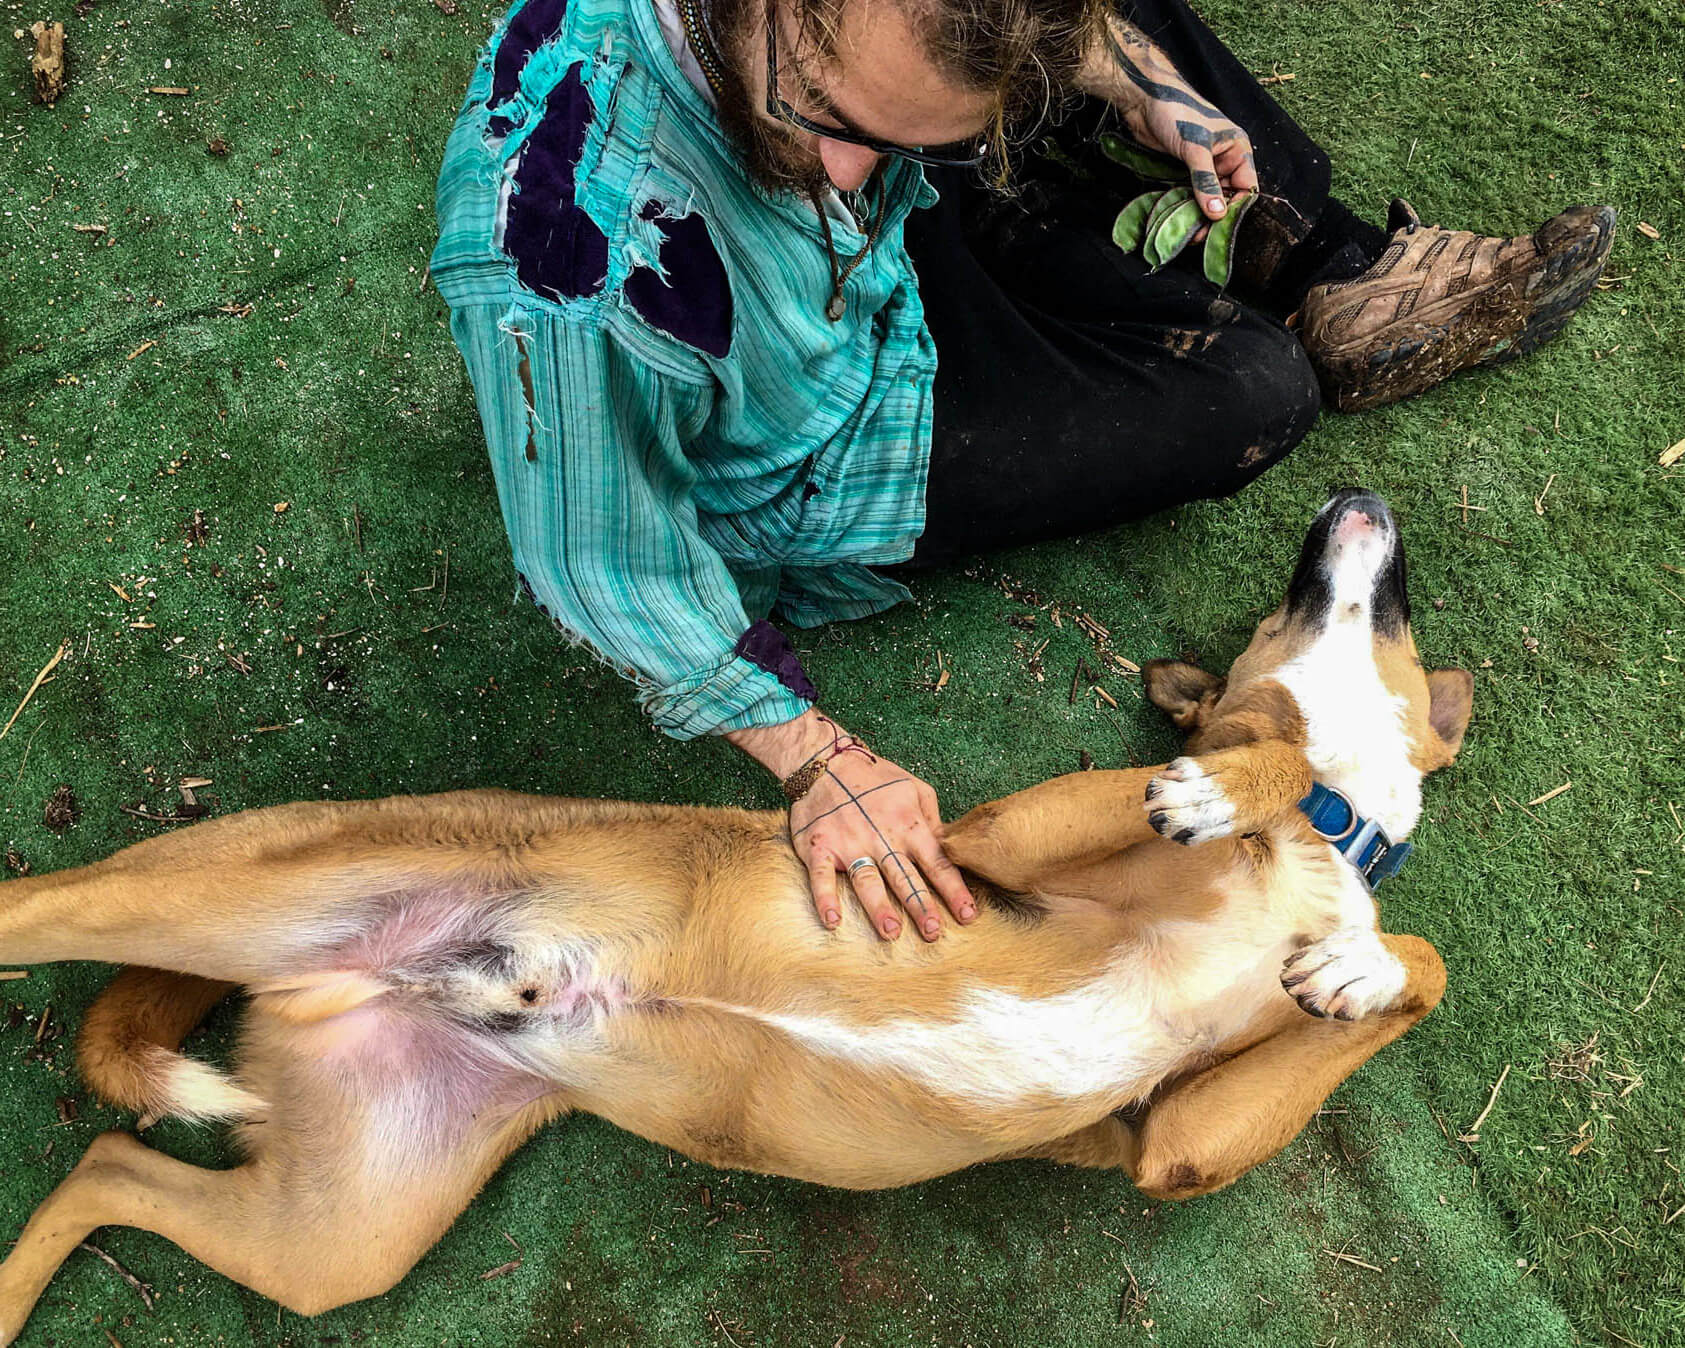 A traveller avoiding burnout by patting a dog